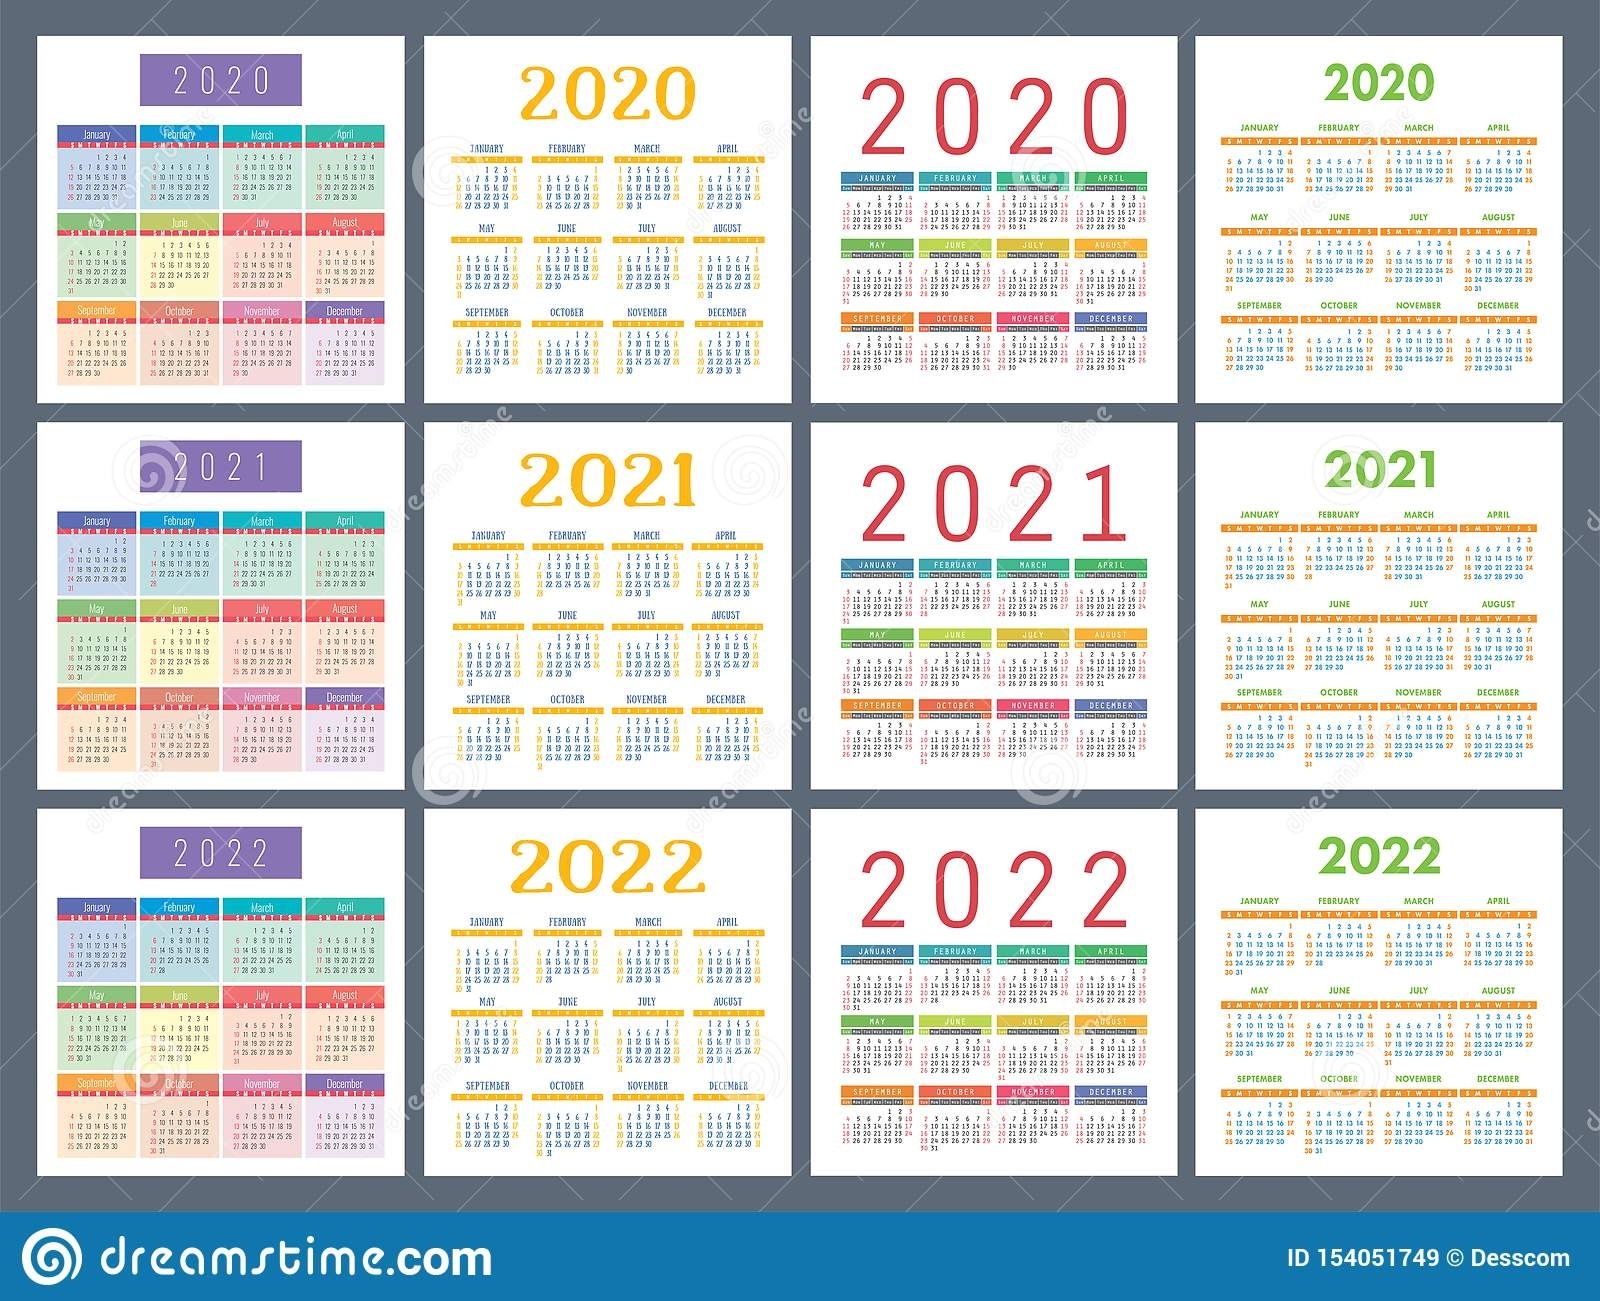 Exceptional 2020 Calendar Week 39 • Printable Blank Calendar Template